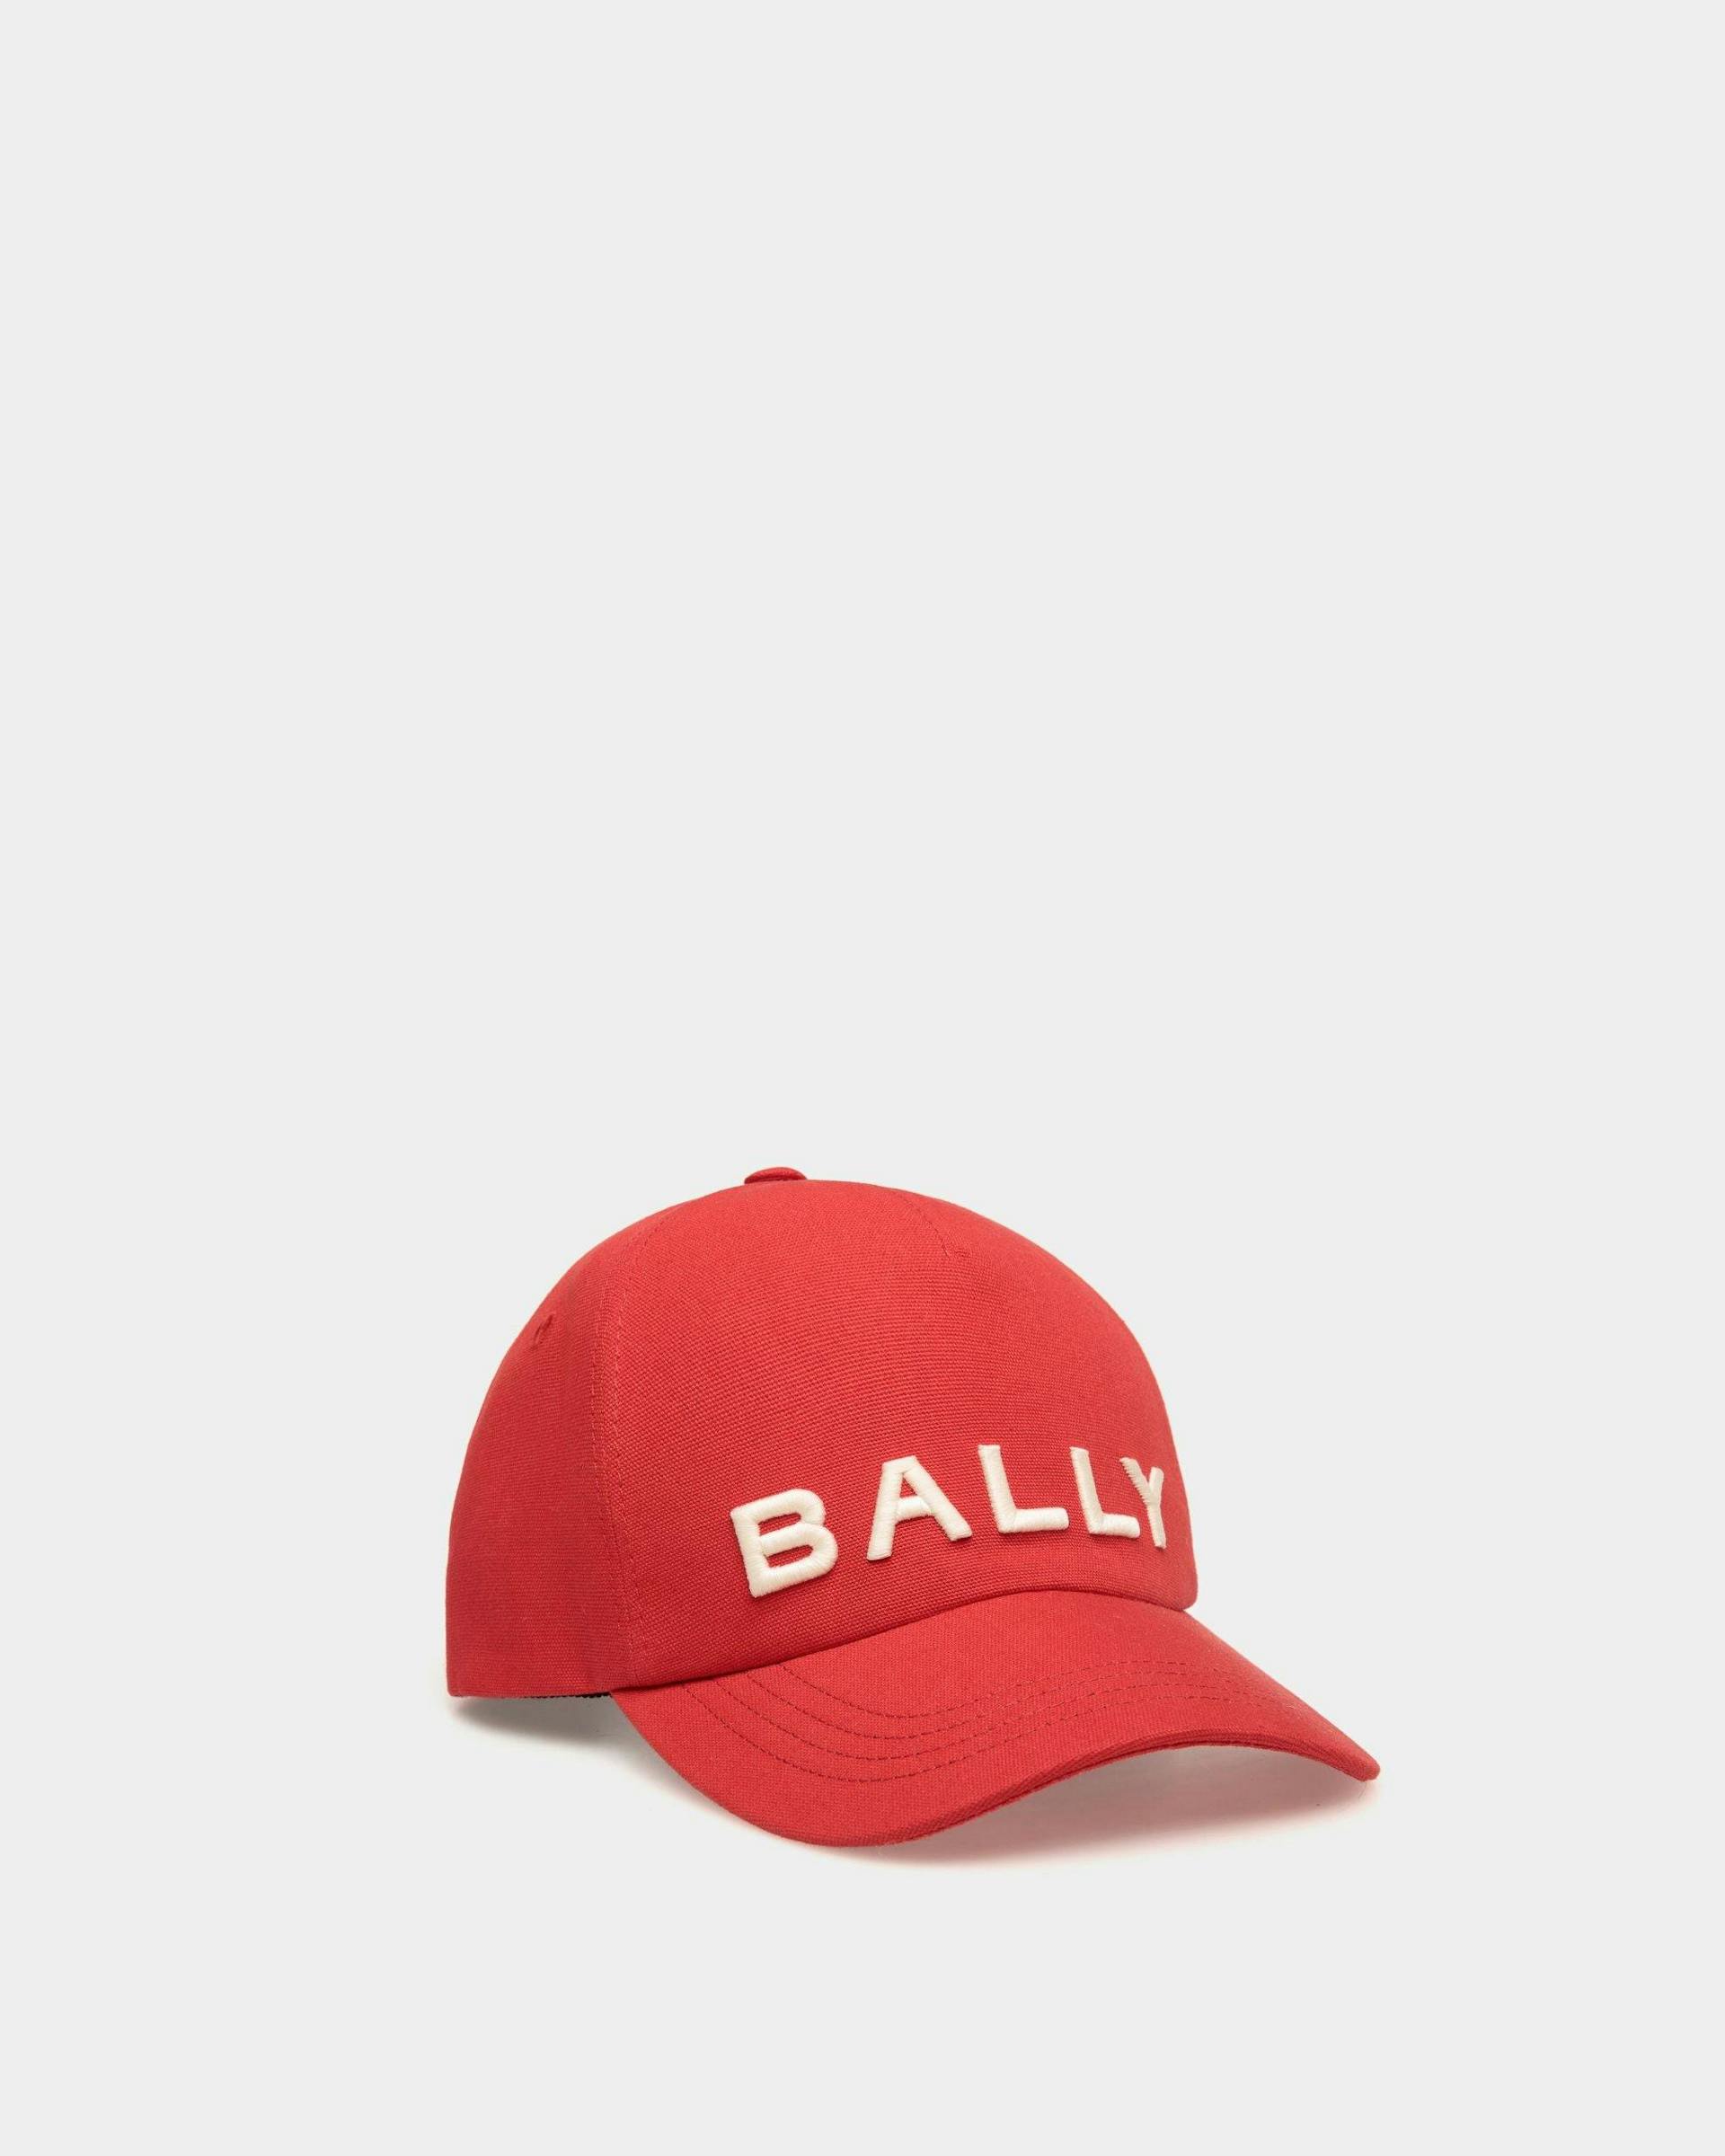 Men's Baseball Hat In Red Cotton | Bally | Still Life Front